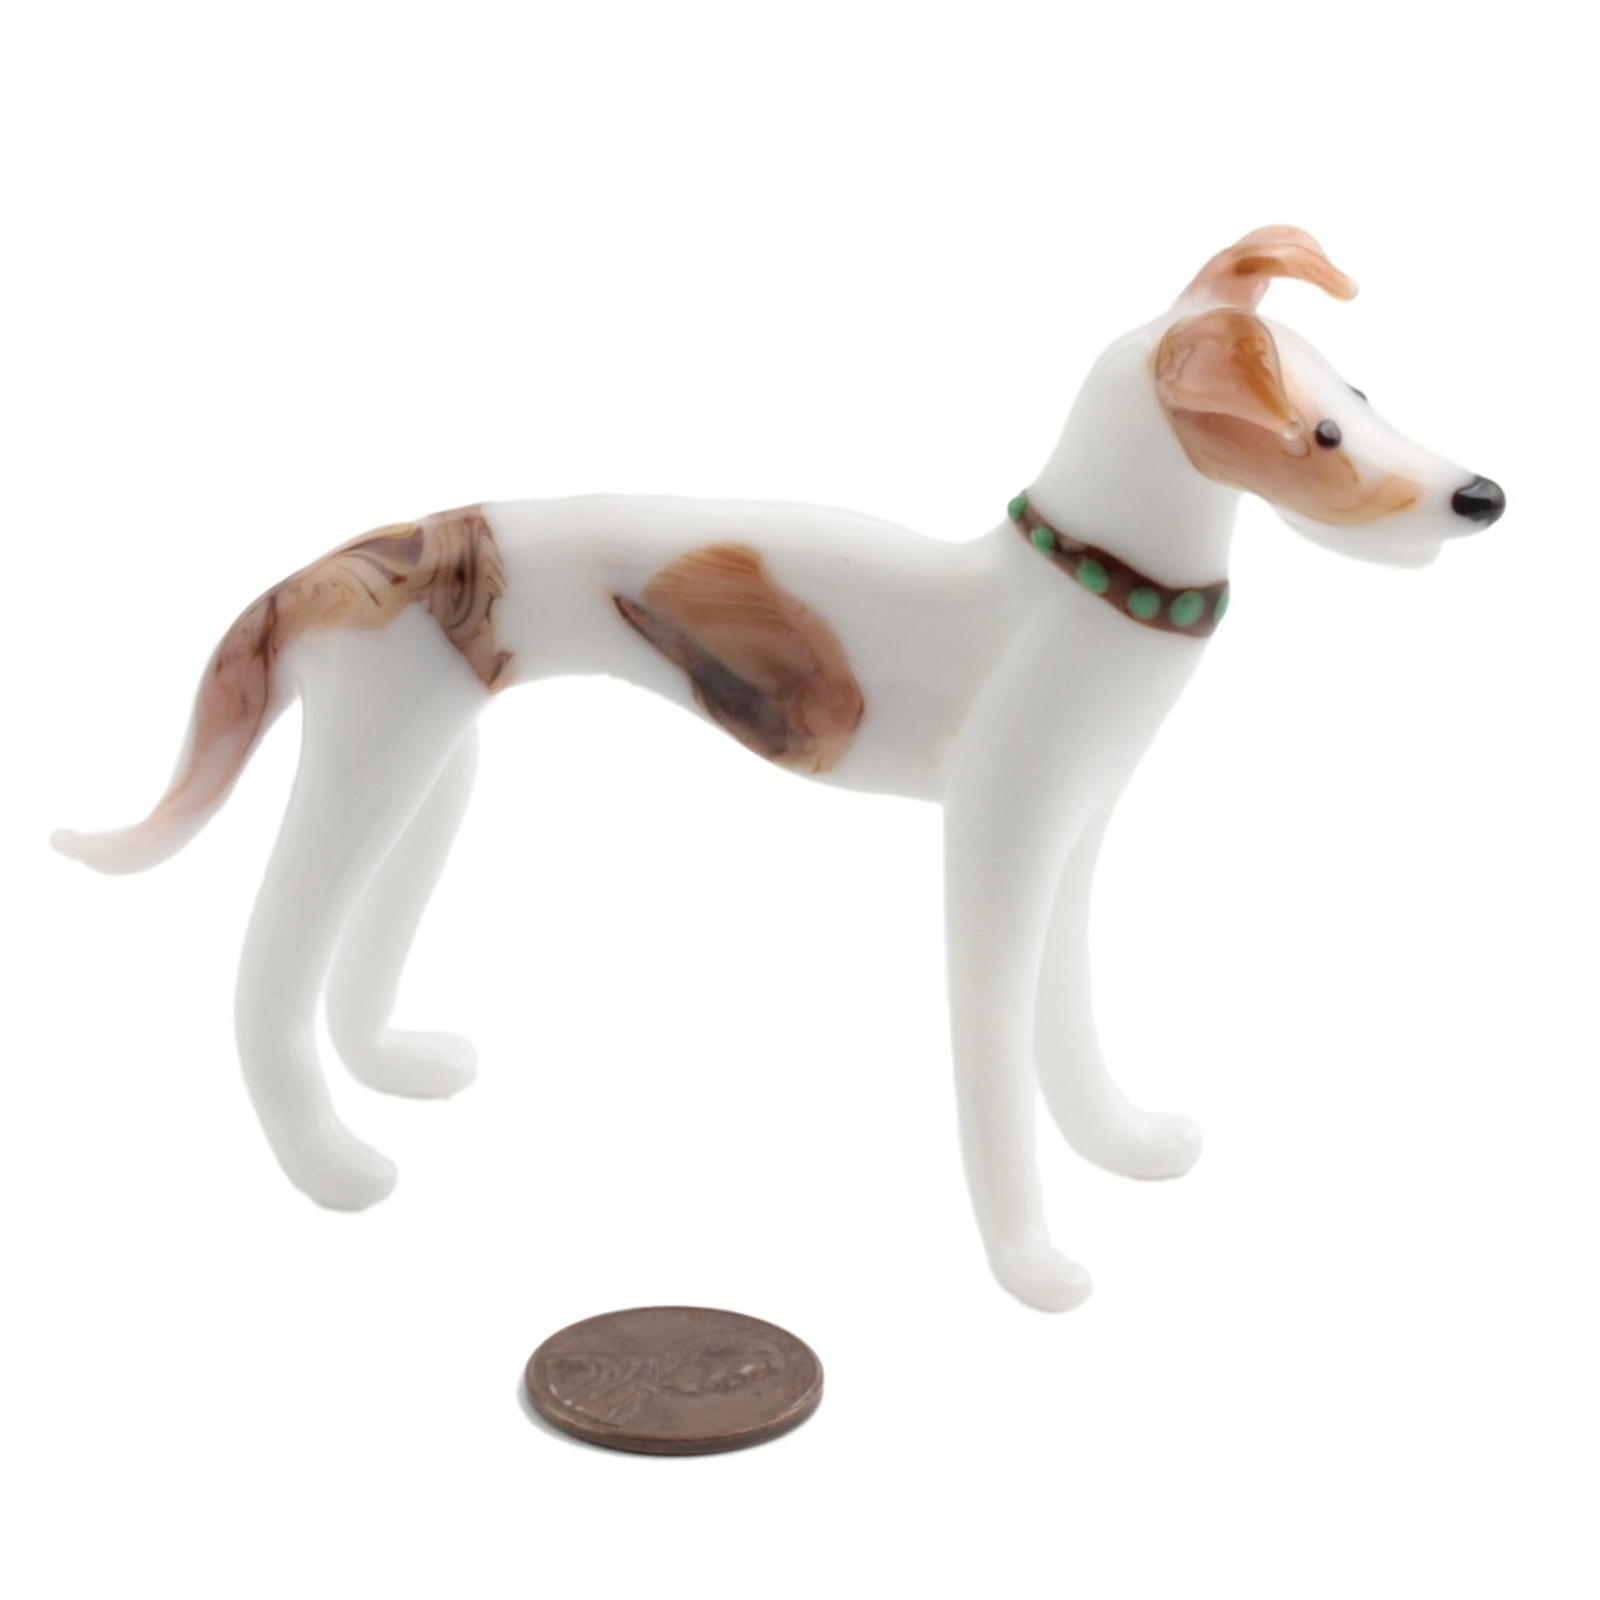 Czech handcrafted lampwork glass dog figurine ornament gift